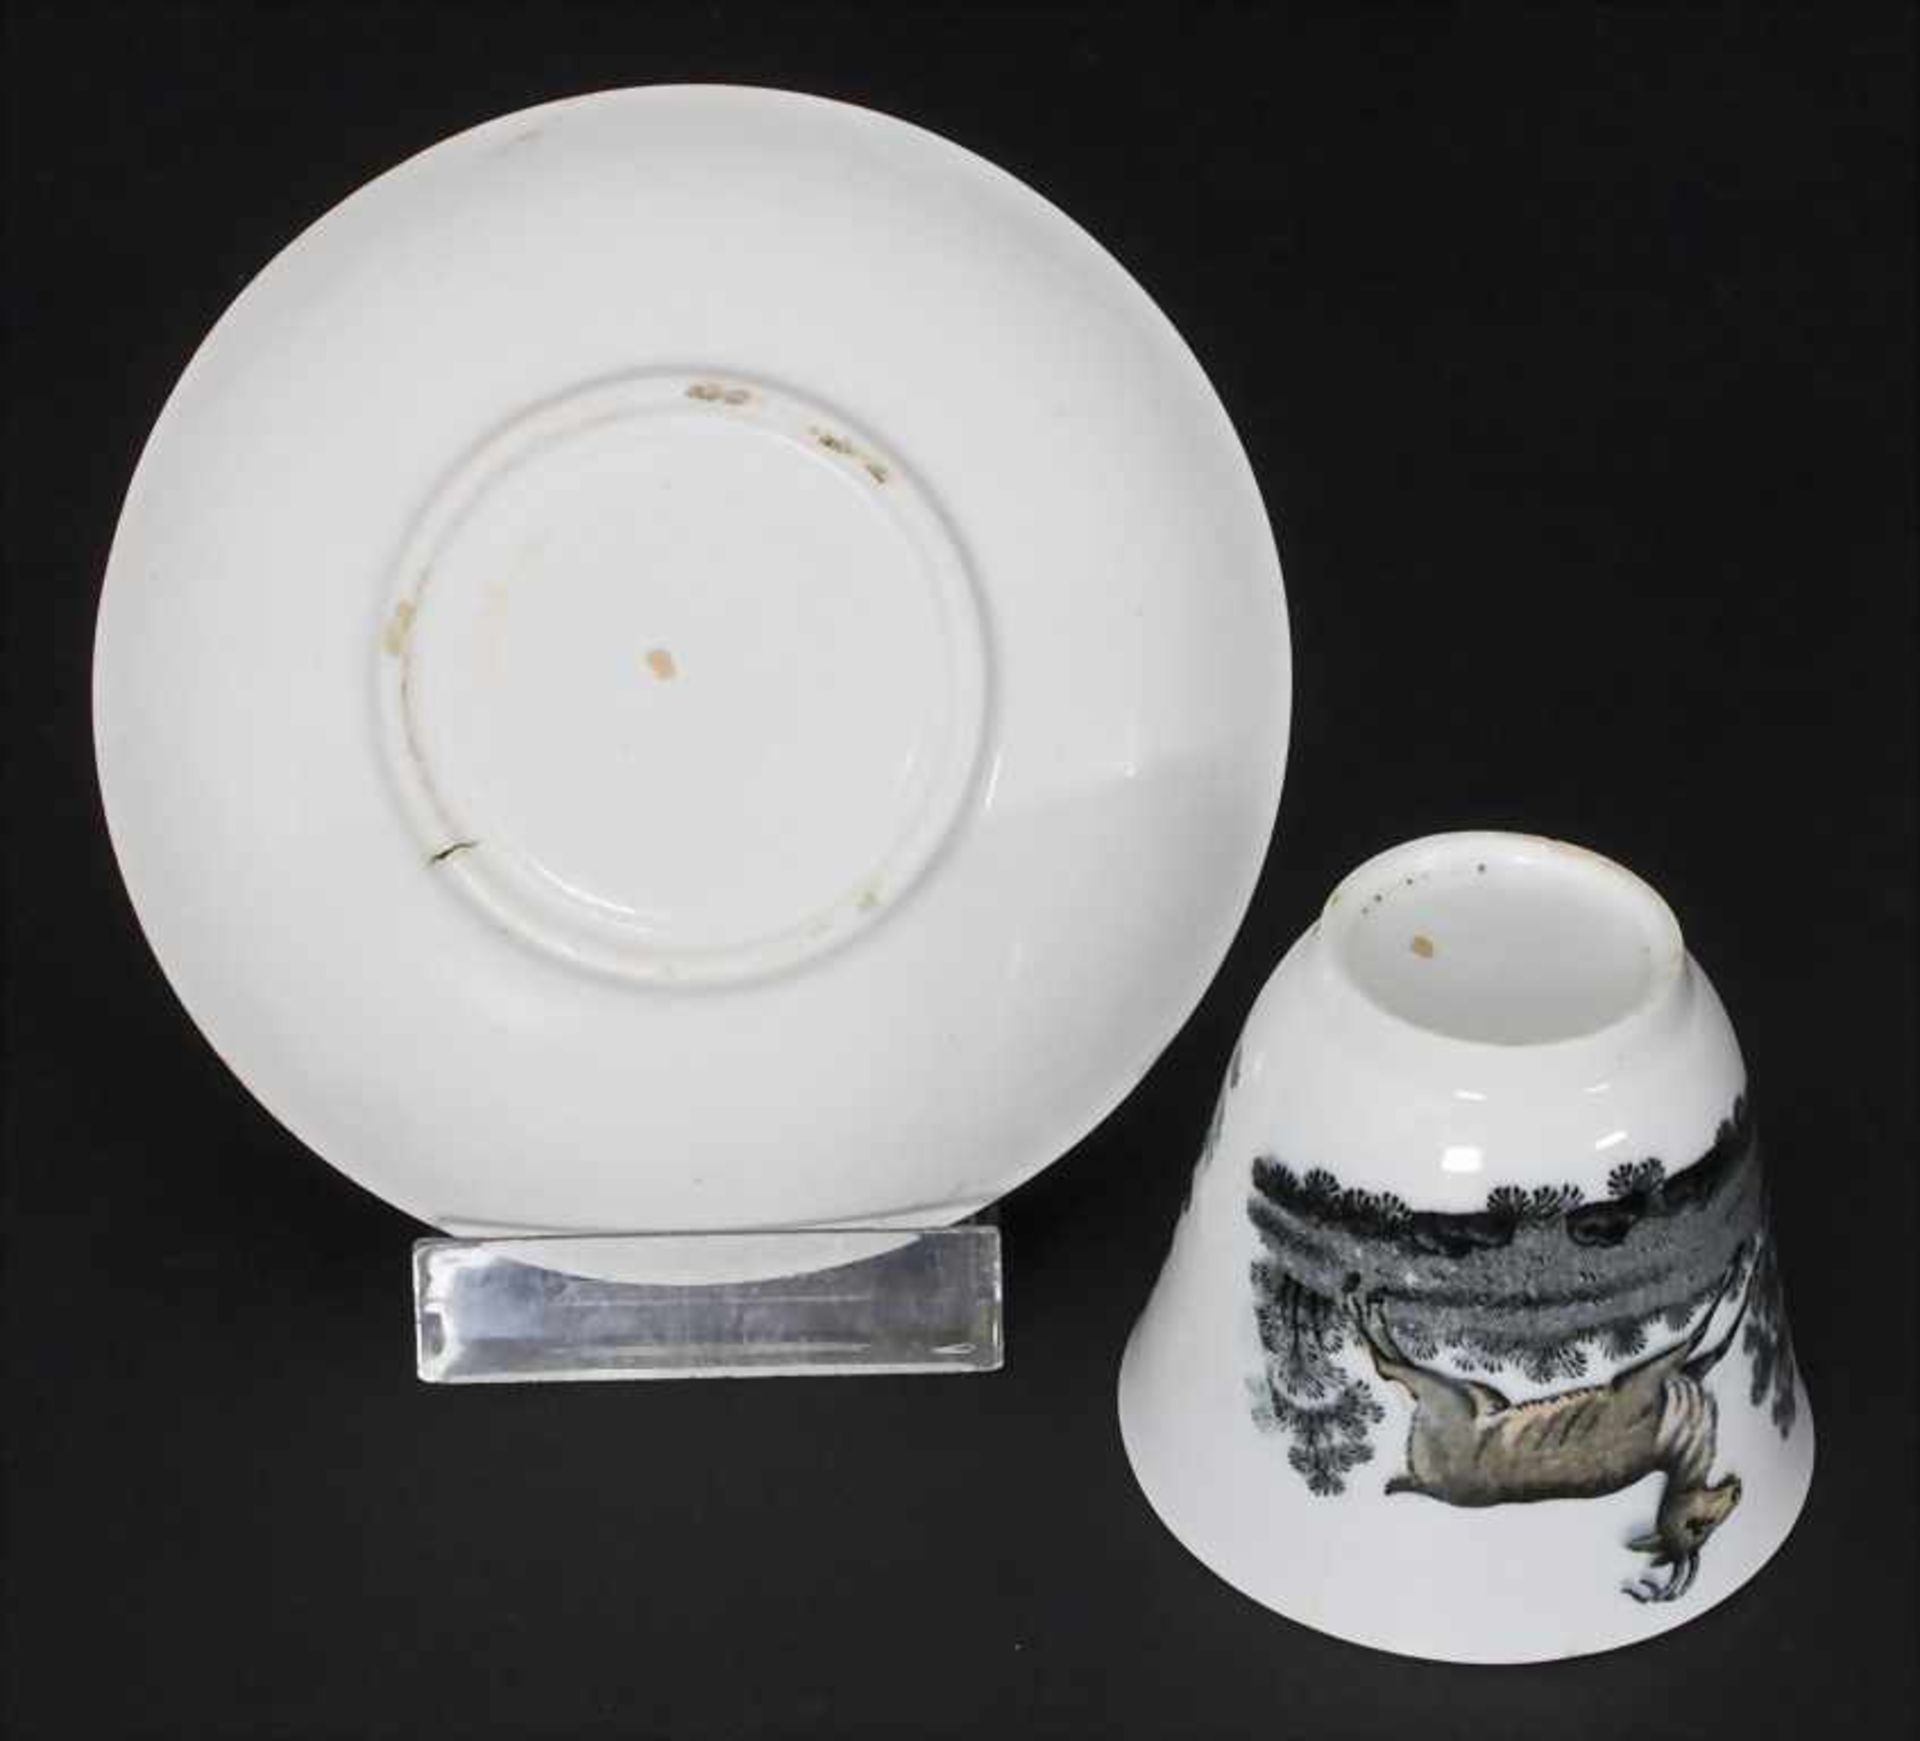 6 einfache Teeschalen mit Untertassen / 6 tea bowls and saucers, 19. Jh. - Bild 4 aus 5